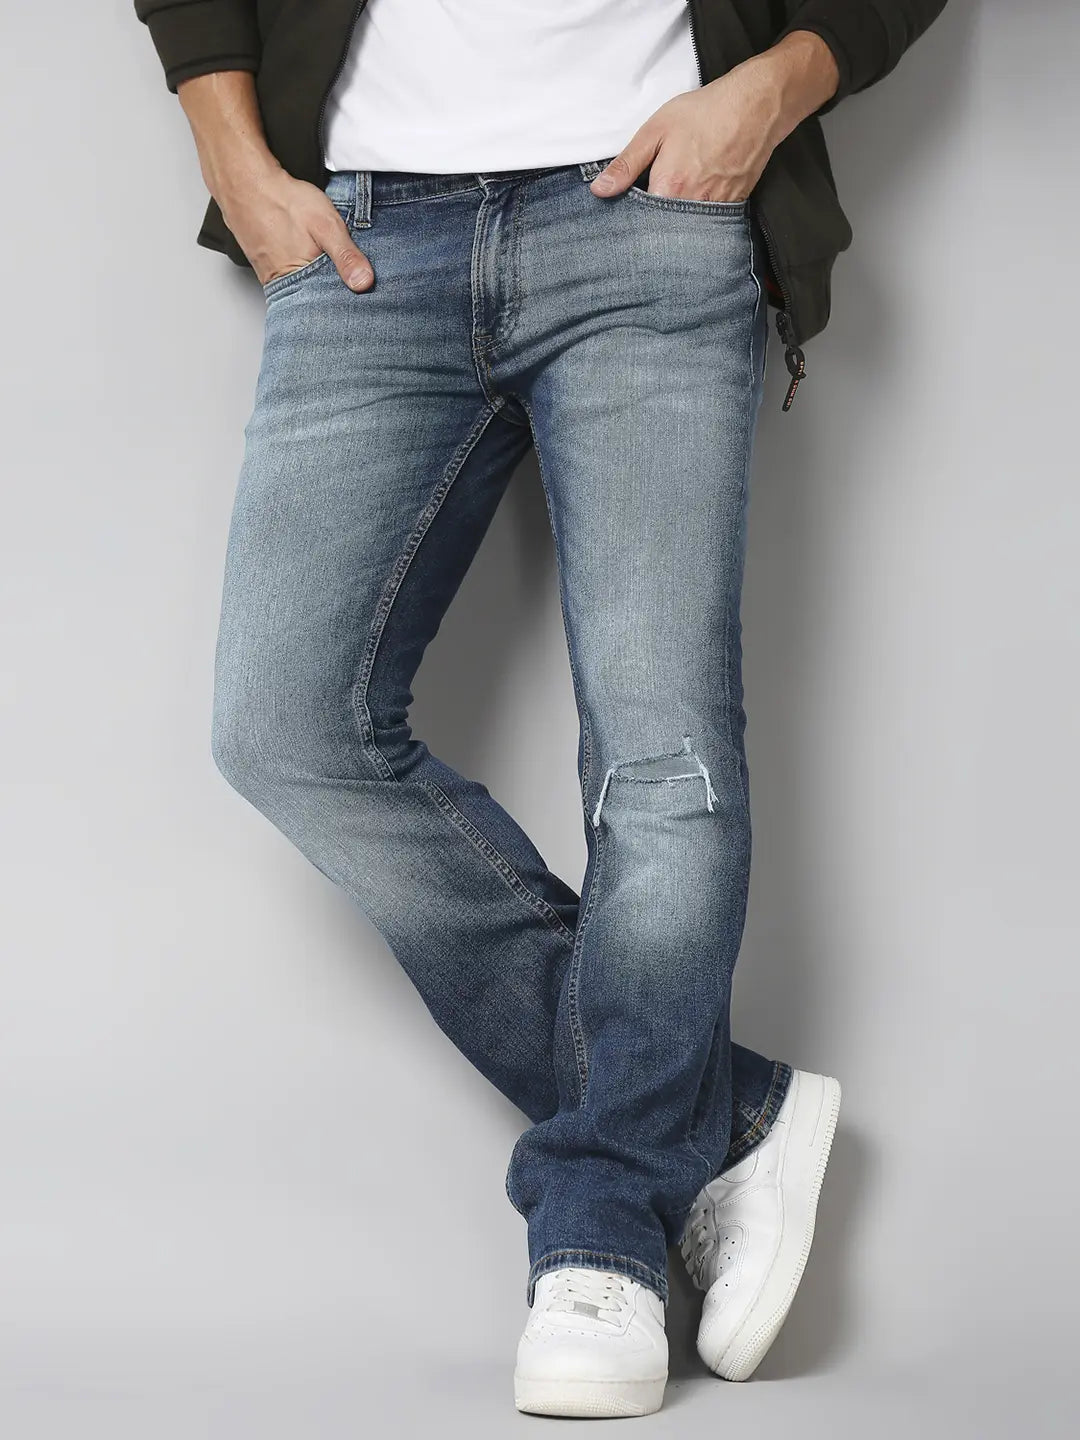 Blue Jeans - Bootcut Fit